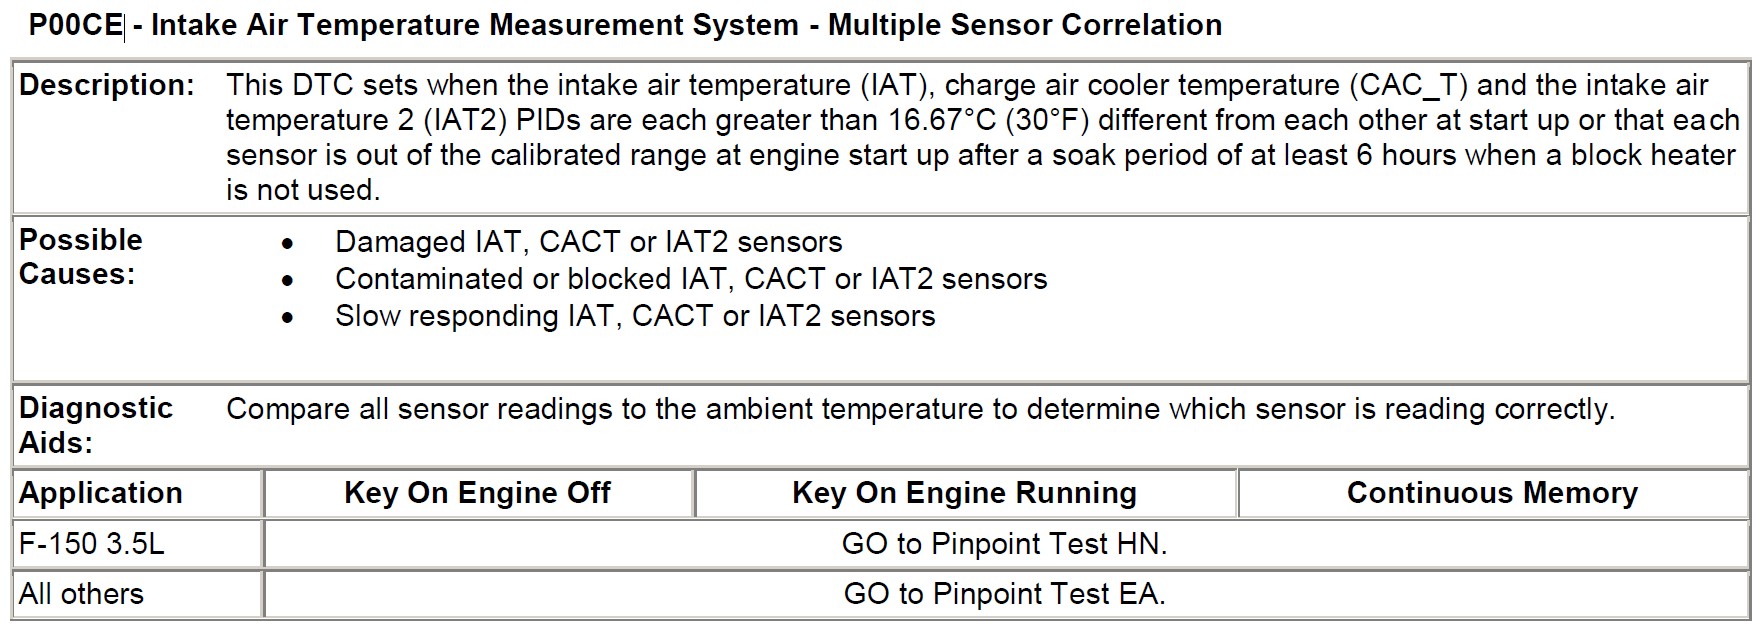 P00CE - Intake Air Temperature Measurement System - Multiple Sensor Correlation.jpg